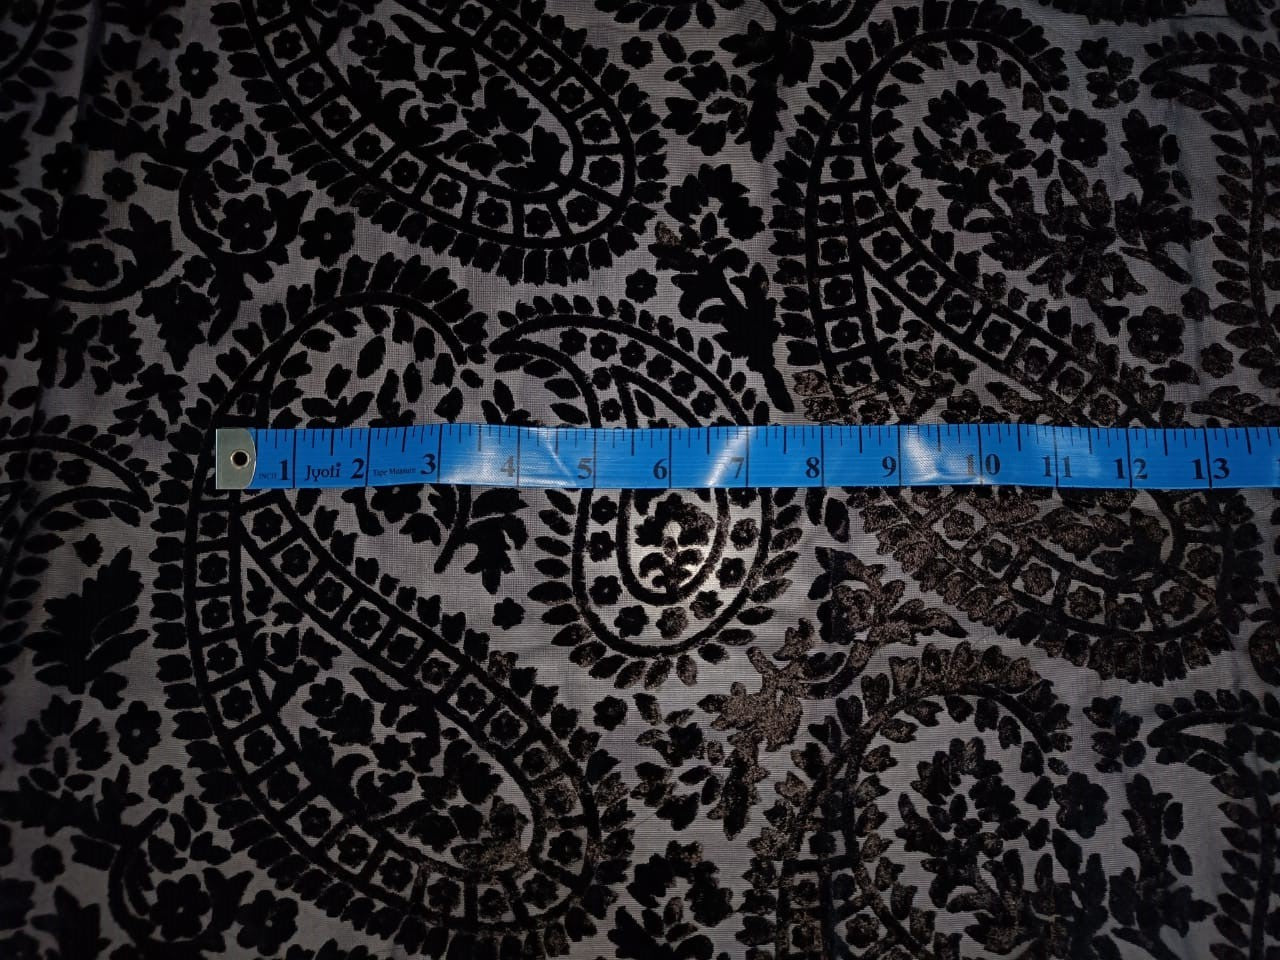 Black Devore Polyester Viscose Burnout Velvet fabric ~ 44&quot; wide [9851]